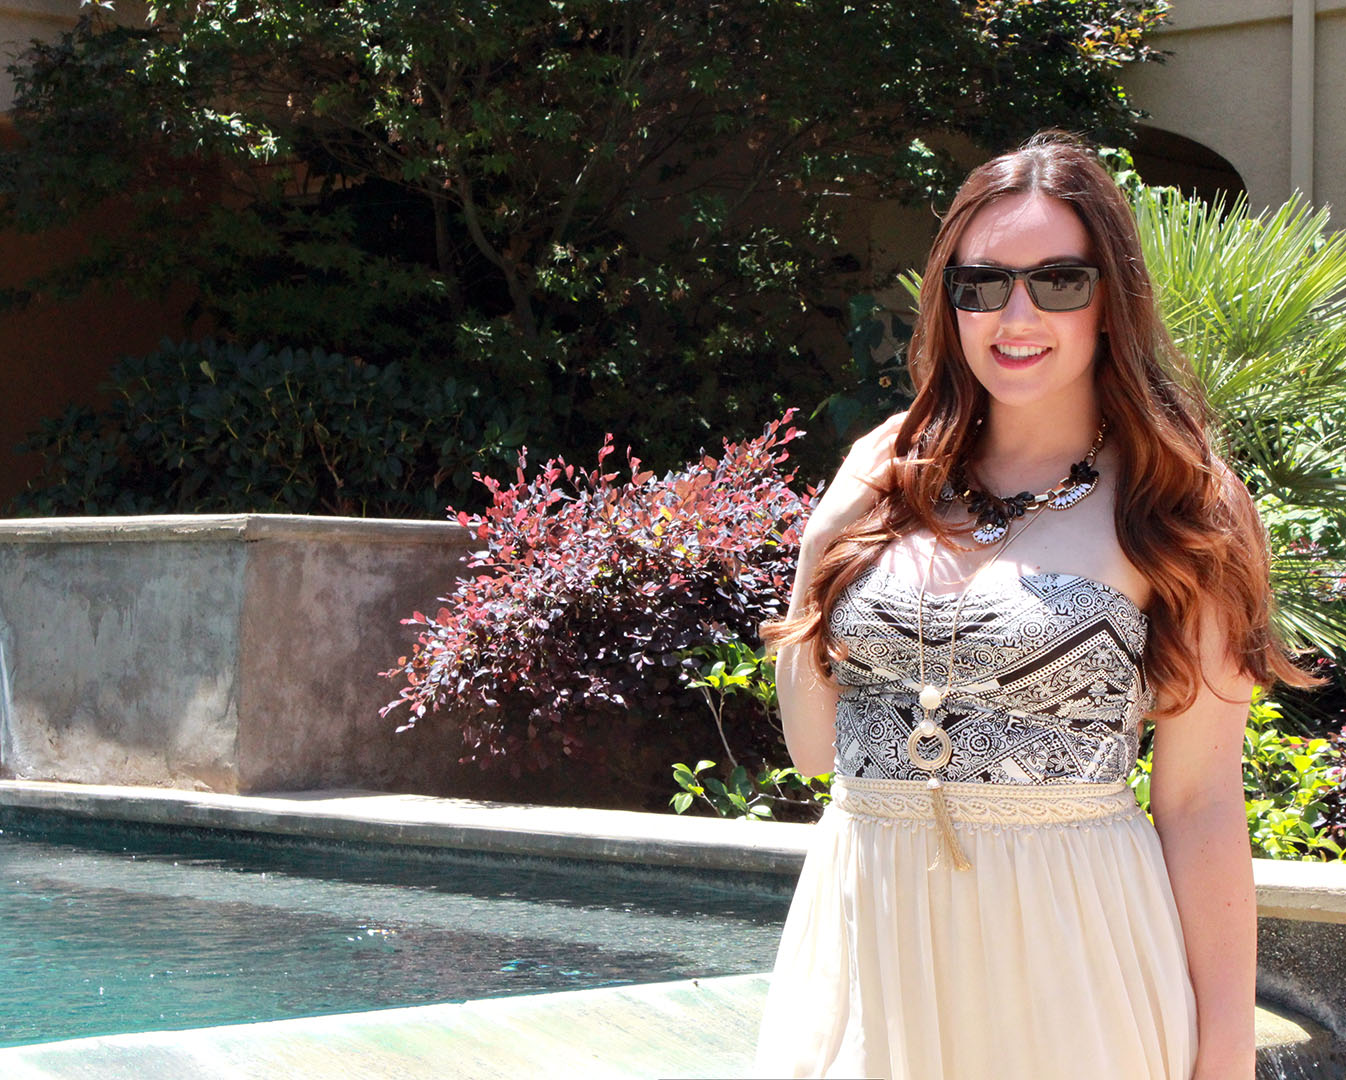 Top San Francisco fashion blogger, Just Add Glam